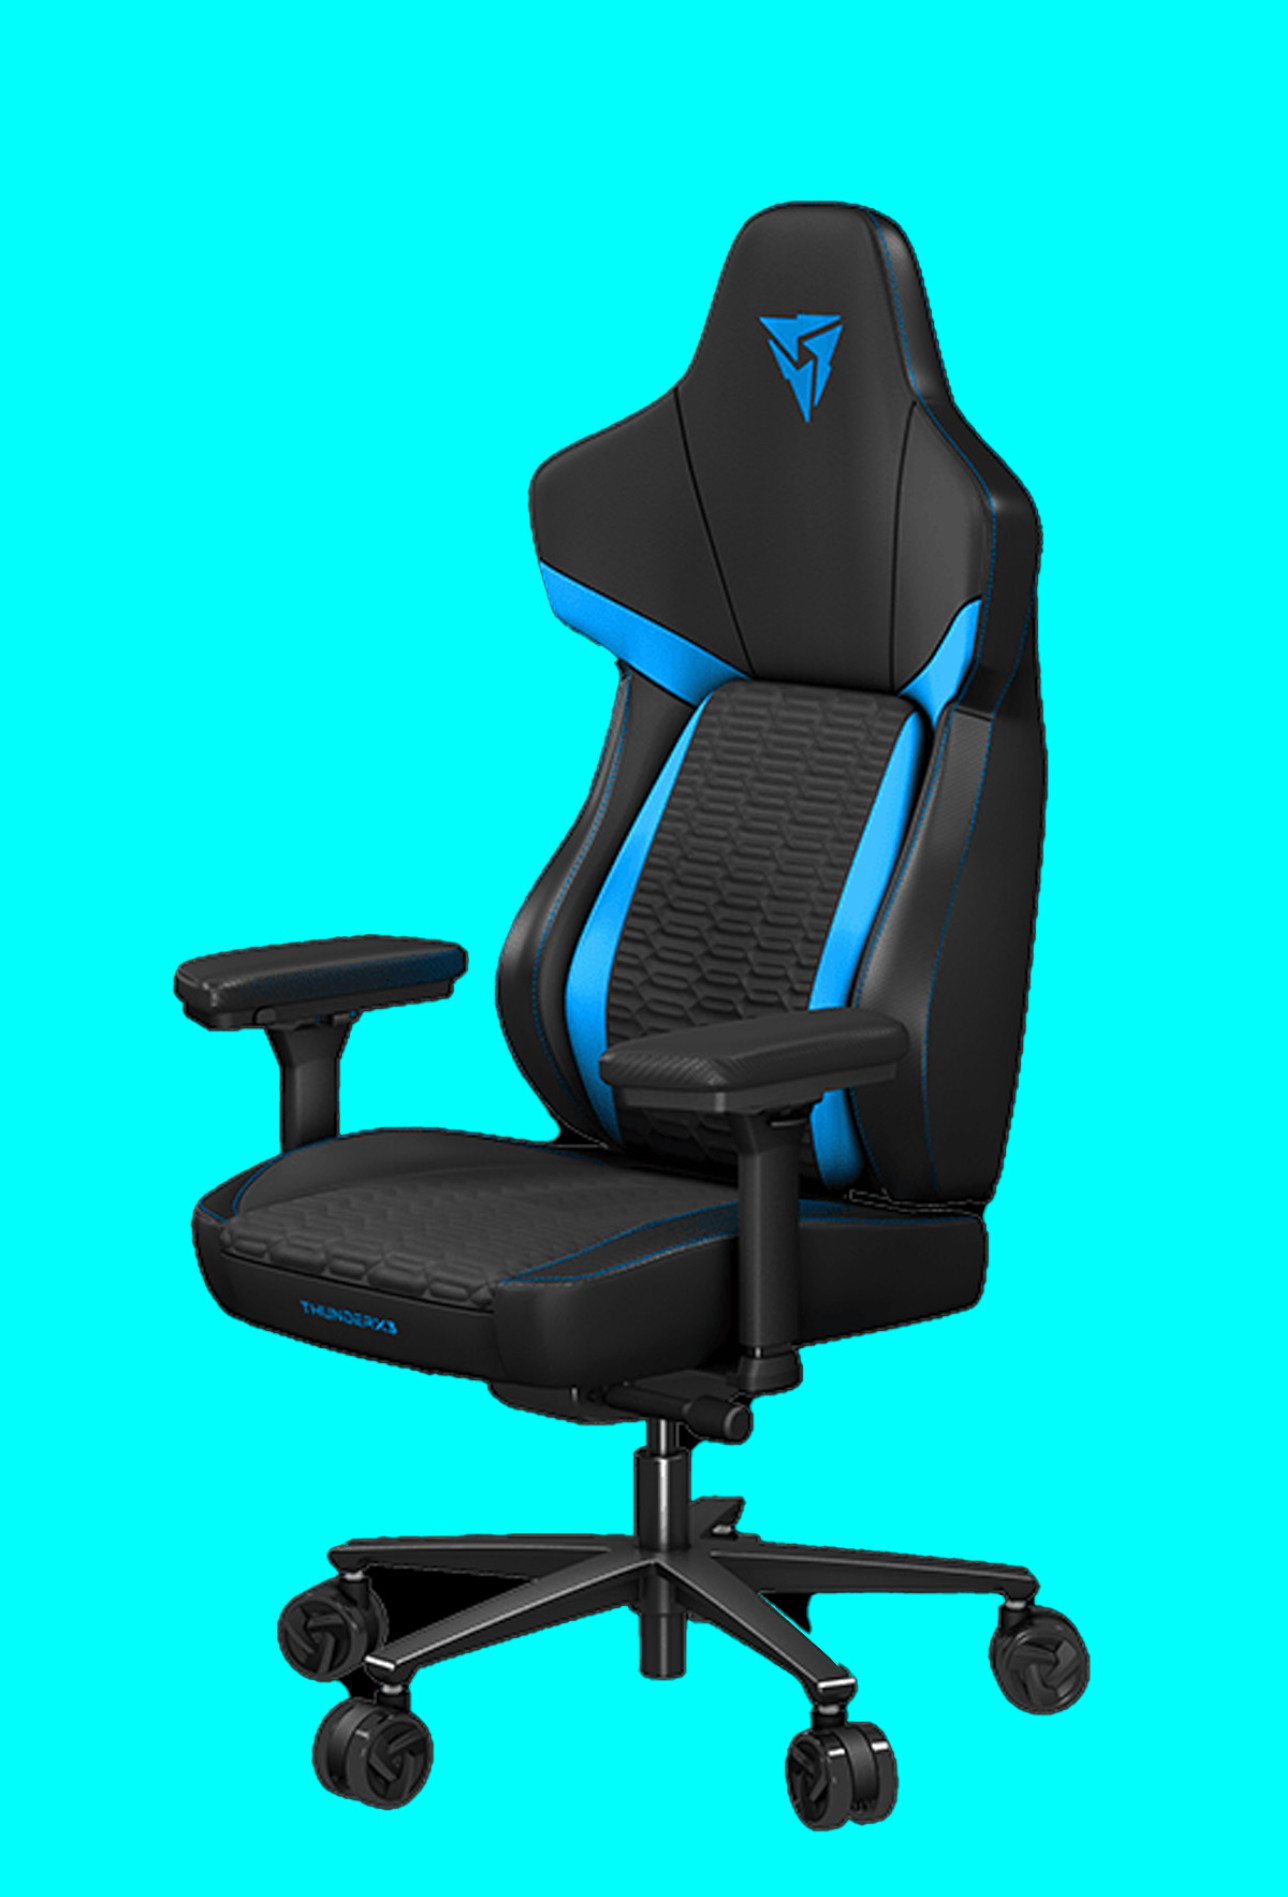 ThunderX gaming chair